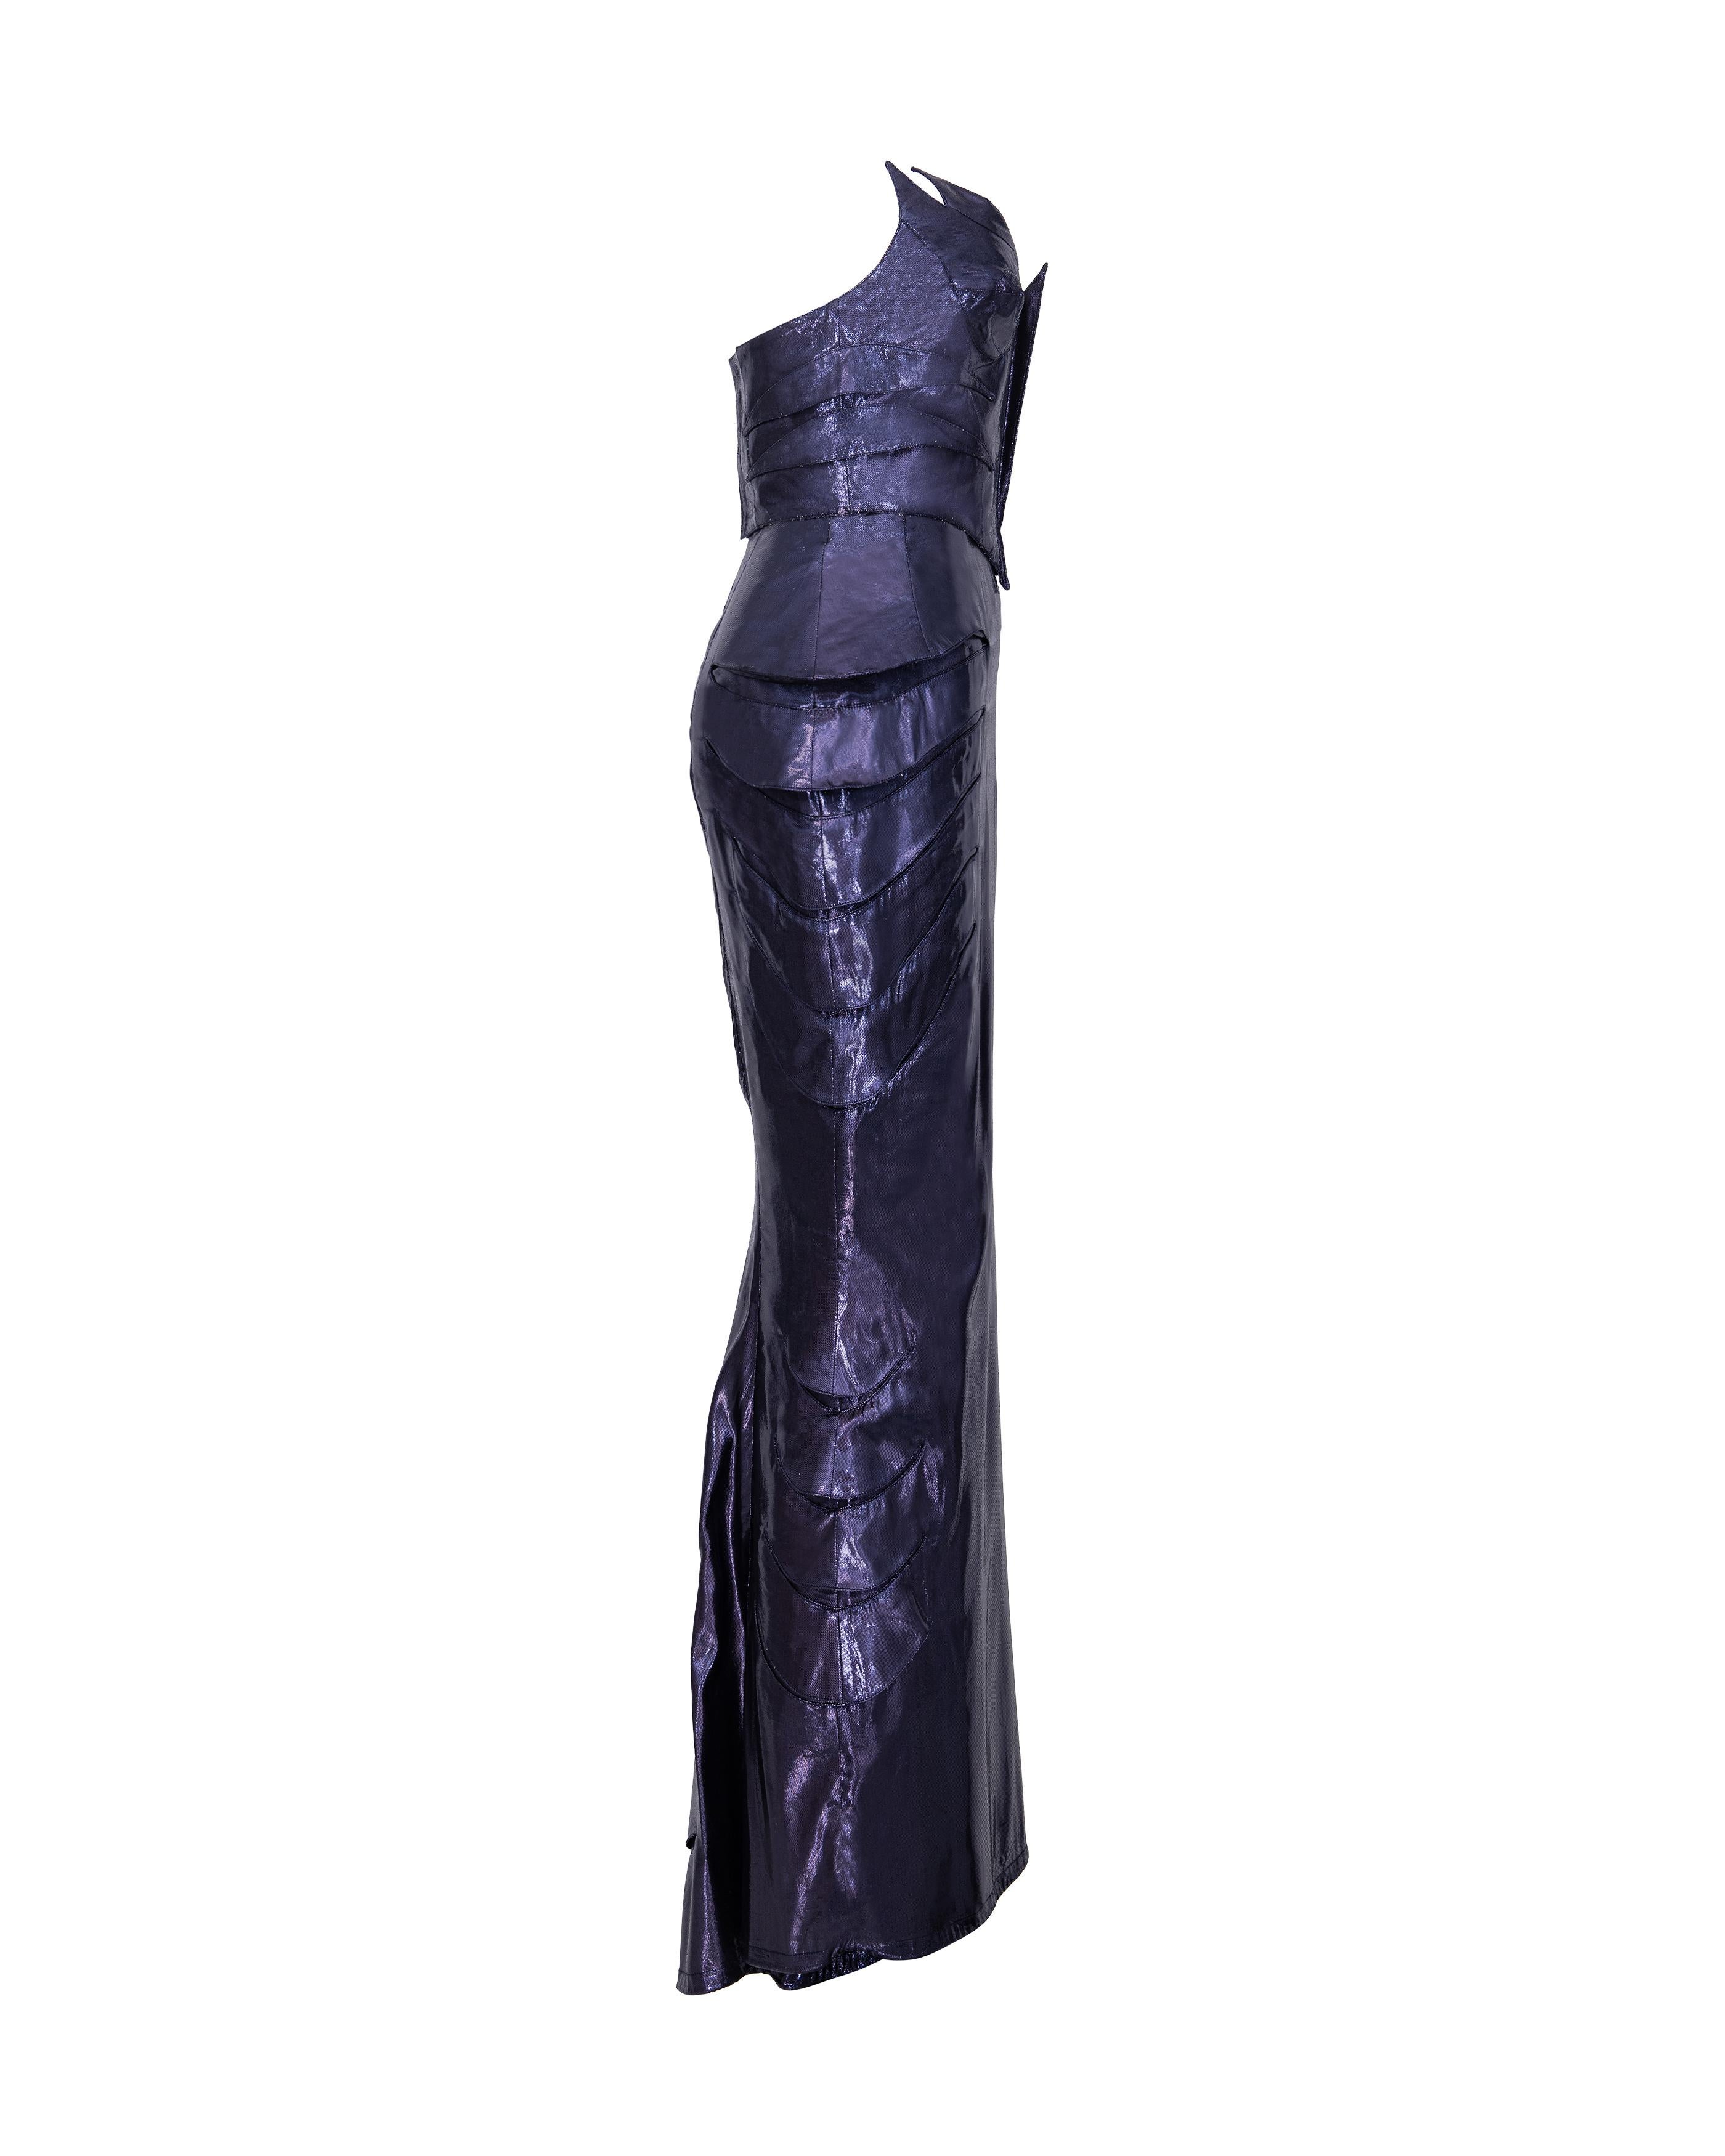 S/S 1989 Thierry Mugler 'Atlantis' Collection Metallic Mermaid Skirt Set 1